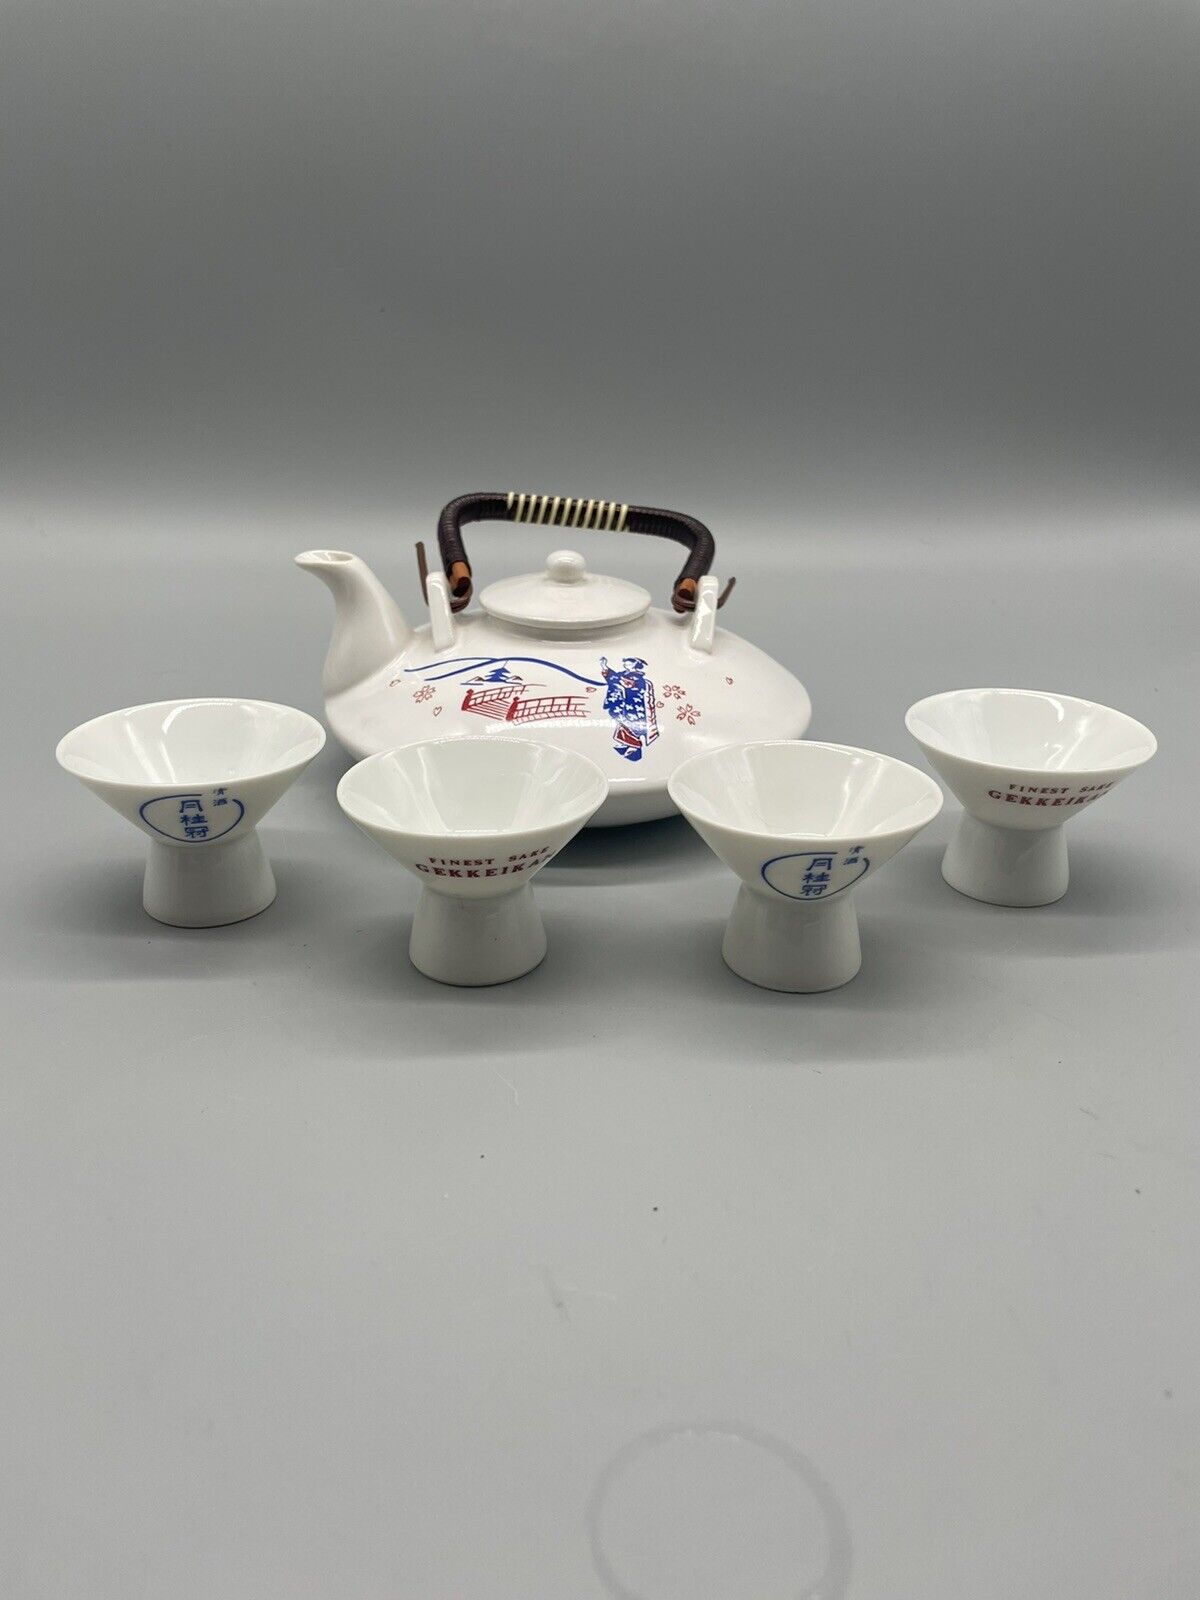 Finest Sake Gekkeikan Porcelain 5 Piece Set Made in Japan